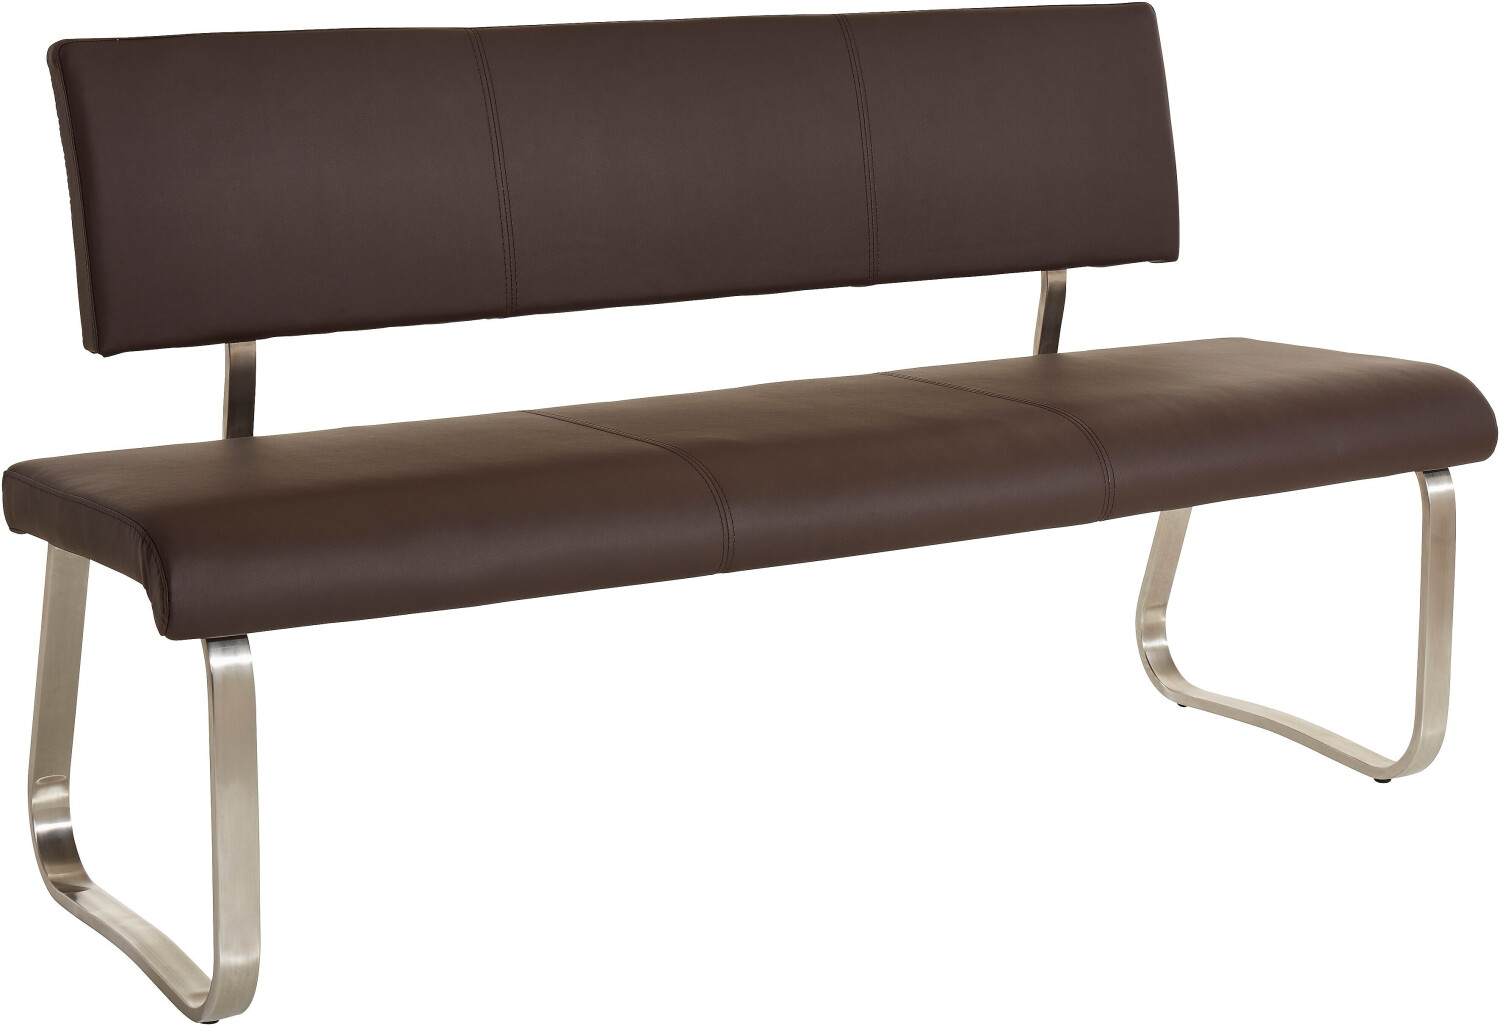 MCA Furniture Arco € 155x86x59cm Preisvergleich ab | 269,00 braun bei